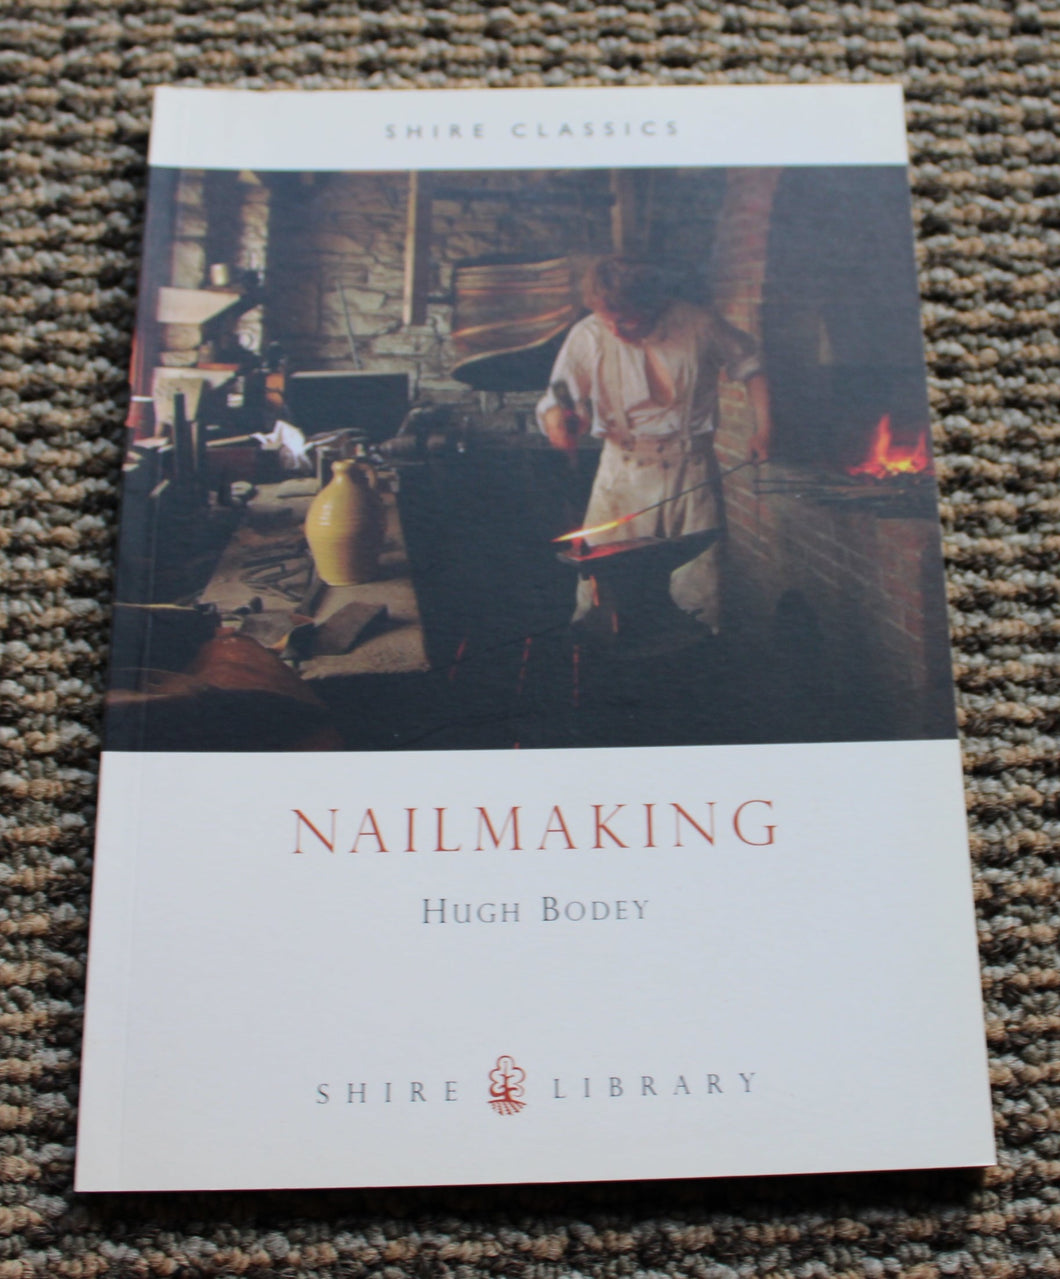 Nailmmaking by Hugh Bodey